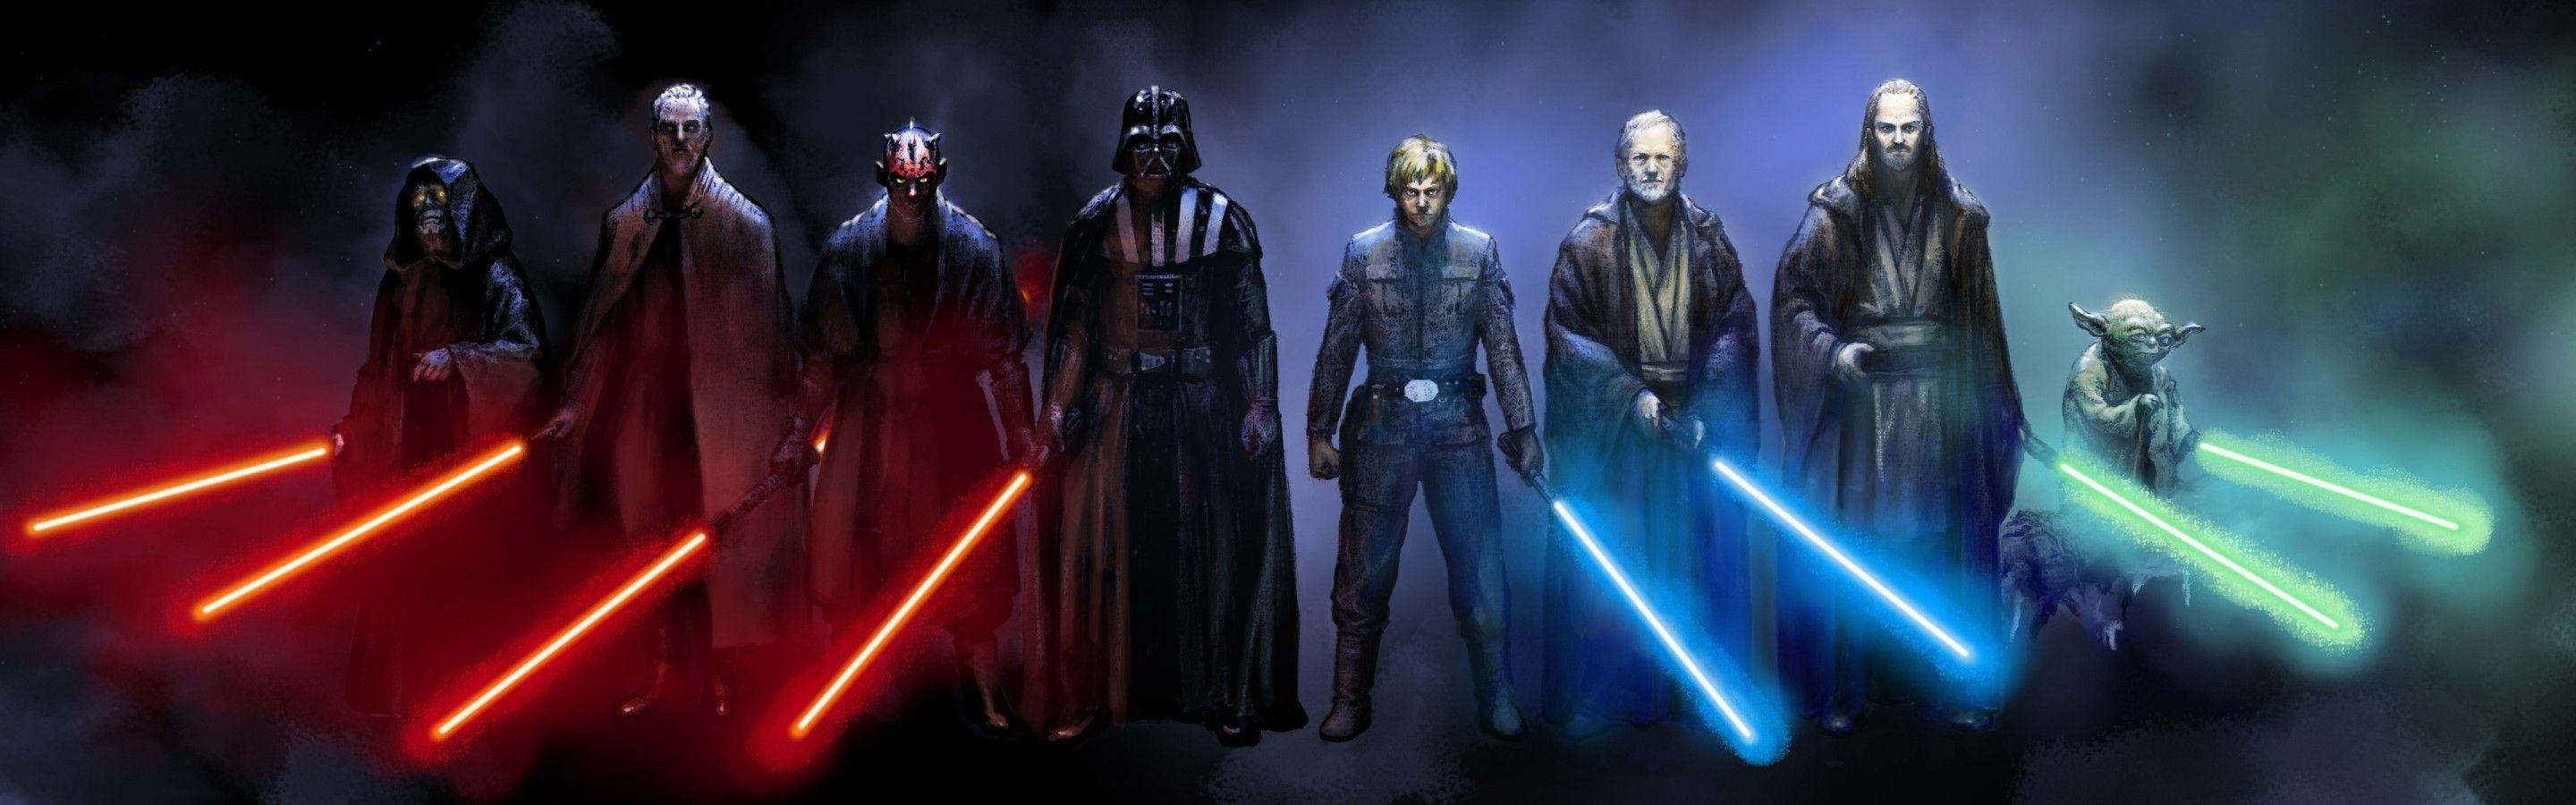 Emperor Palpatine, #Darth Maul, #Anakin Skywalker, #Darth Vader